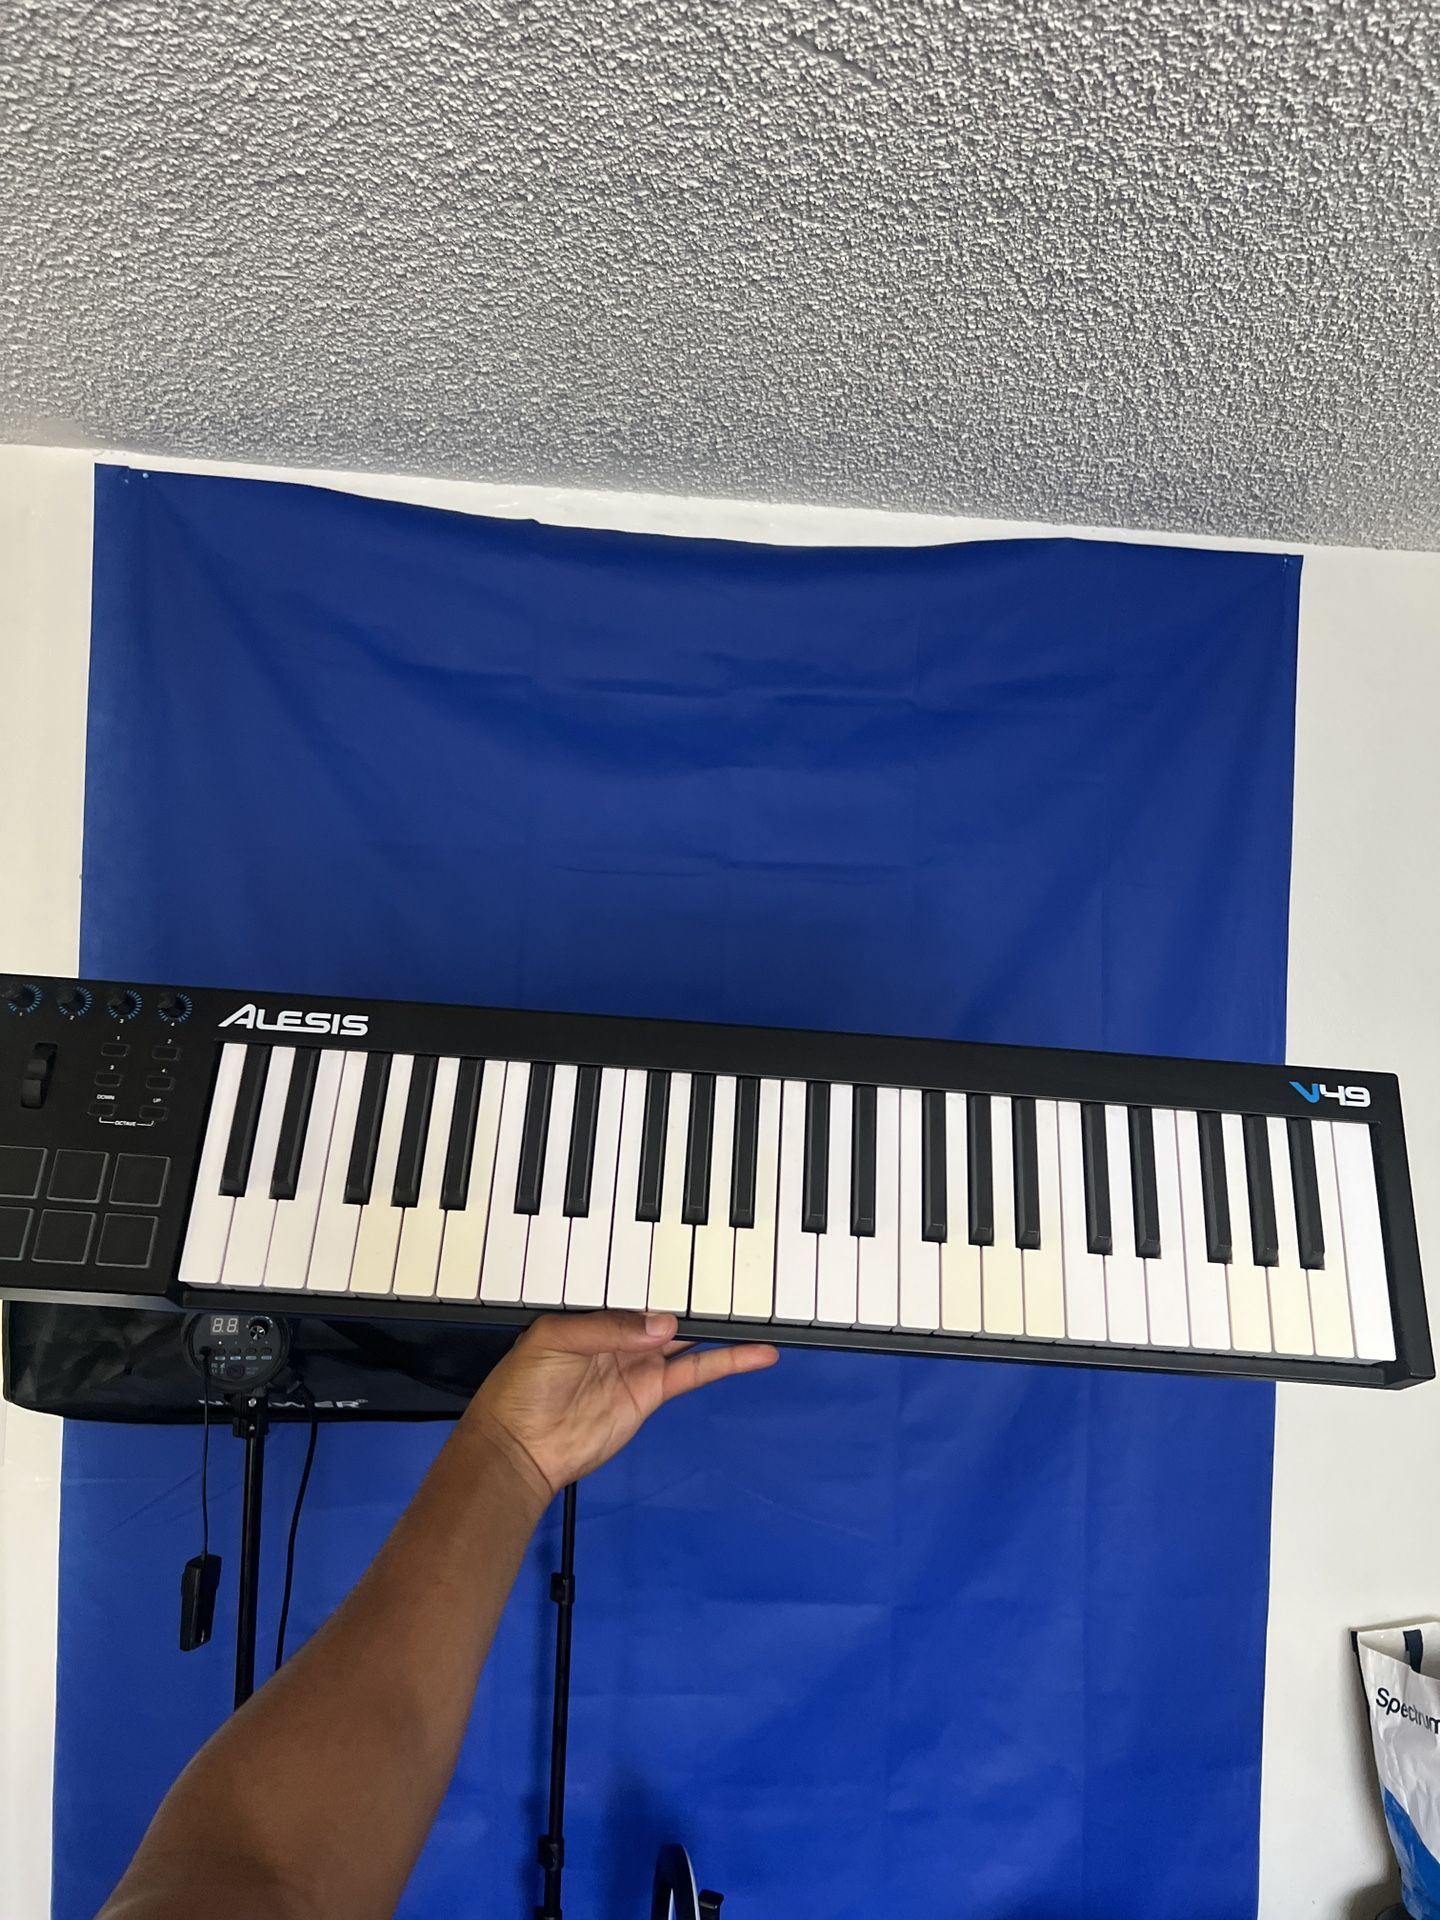 Alesis MIDI keyboard 